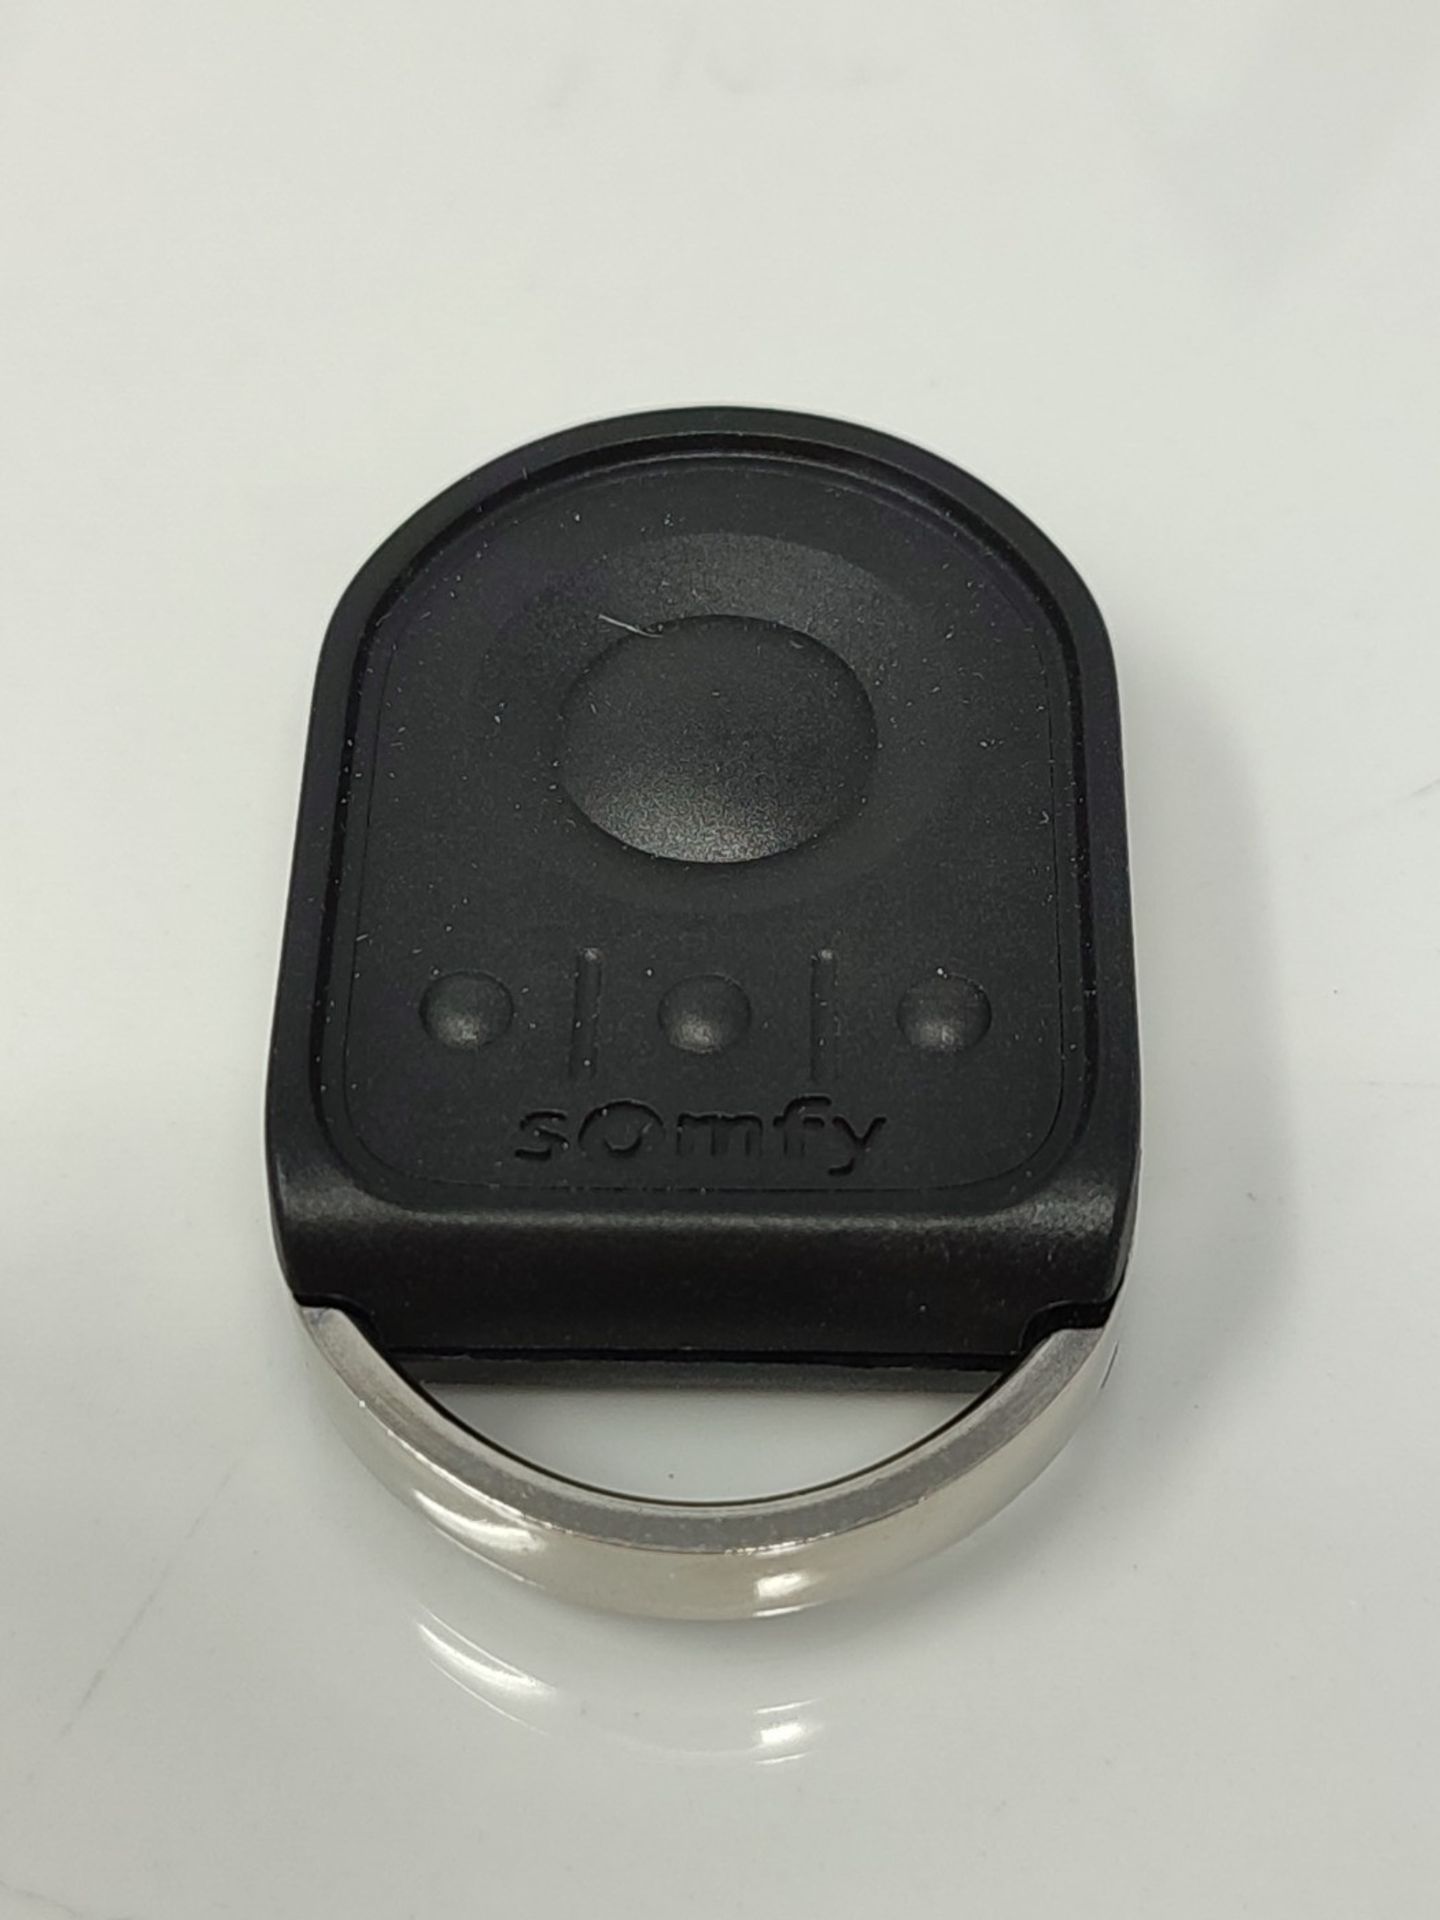 Somfy KEYGO RTS Remote Control - Image 3 of 3